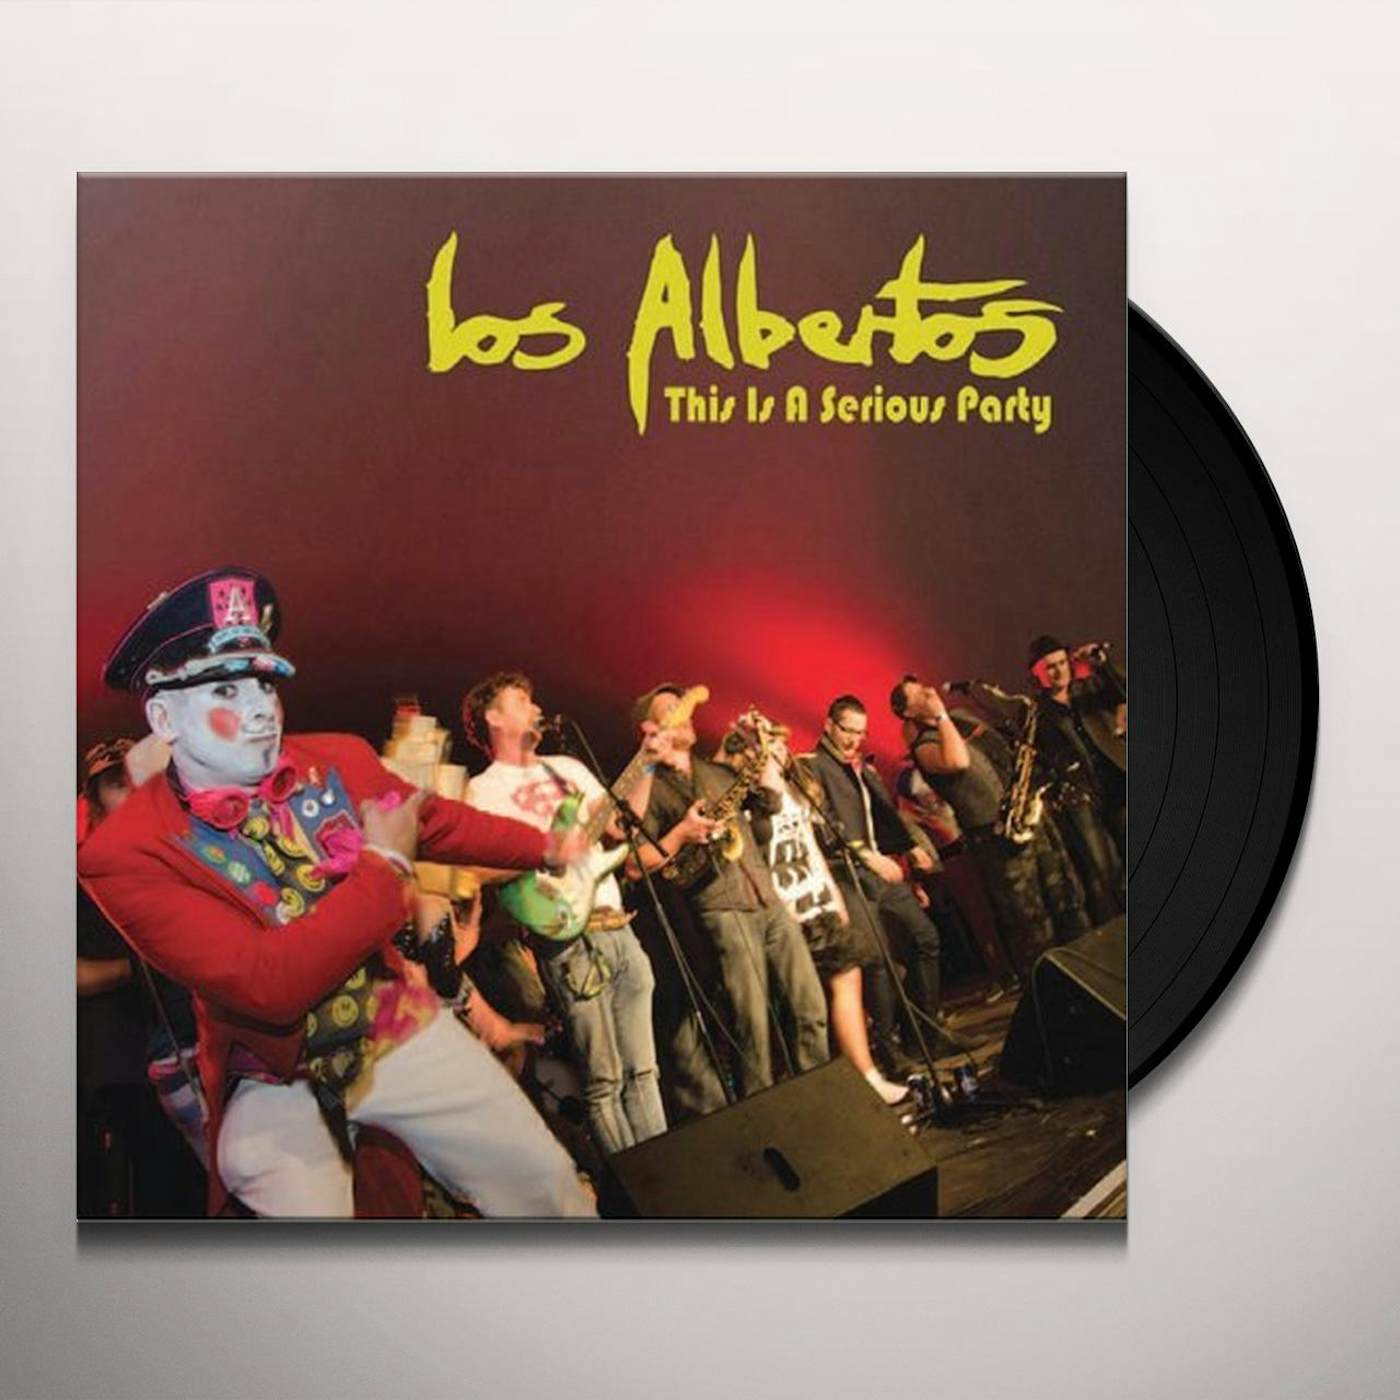 Los Albertos This Is a Serious Party Vinyl Record